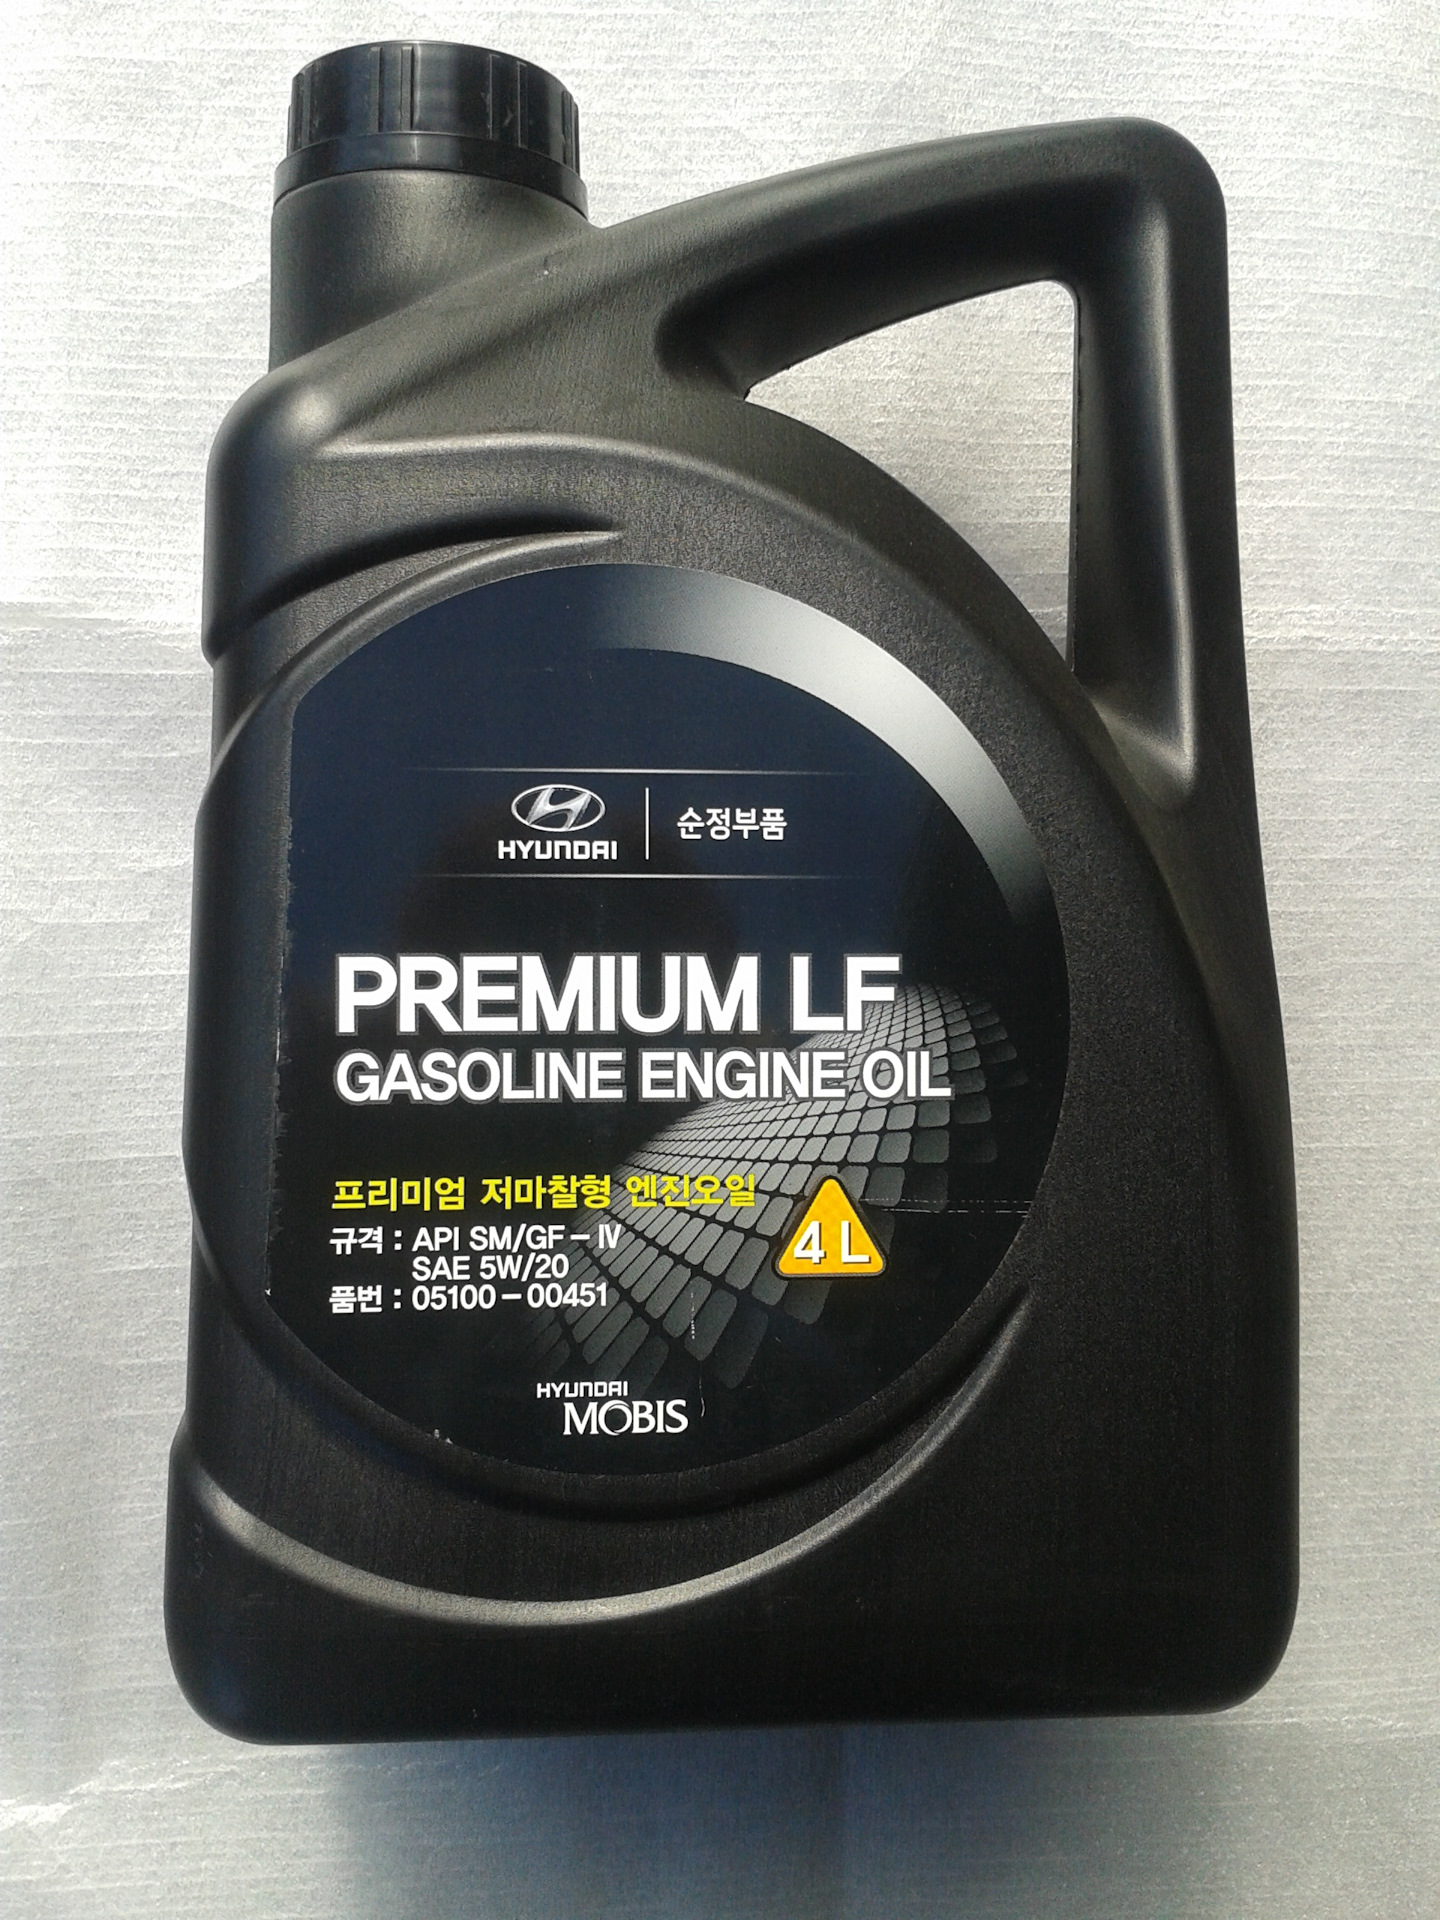 Масло hyundai kia premium. Premium LF gasoline 5w-20. Hyundai Premium LF gasoline 5w30. Масло Hyundai Premium LF gasoline 5w-20. Мобис премиум ЛФ 5w20.